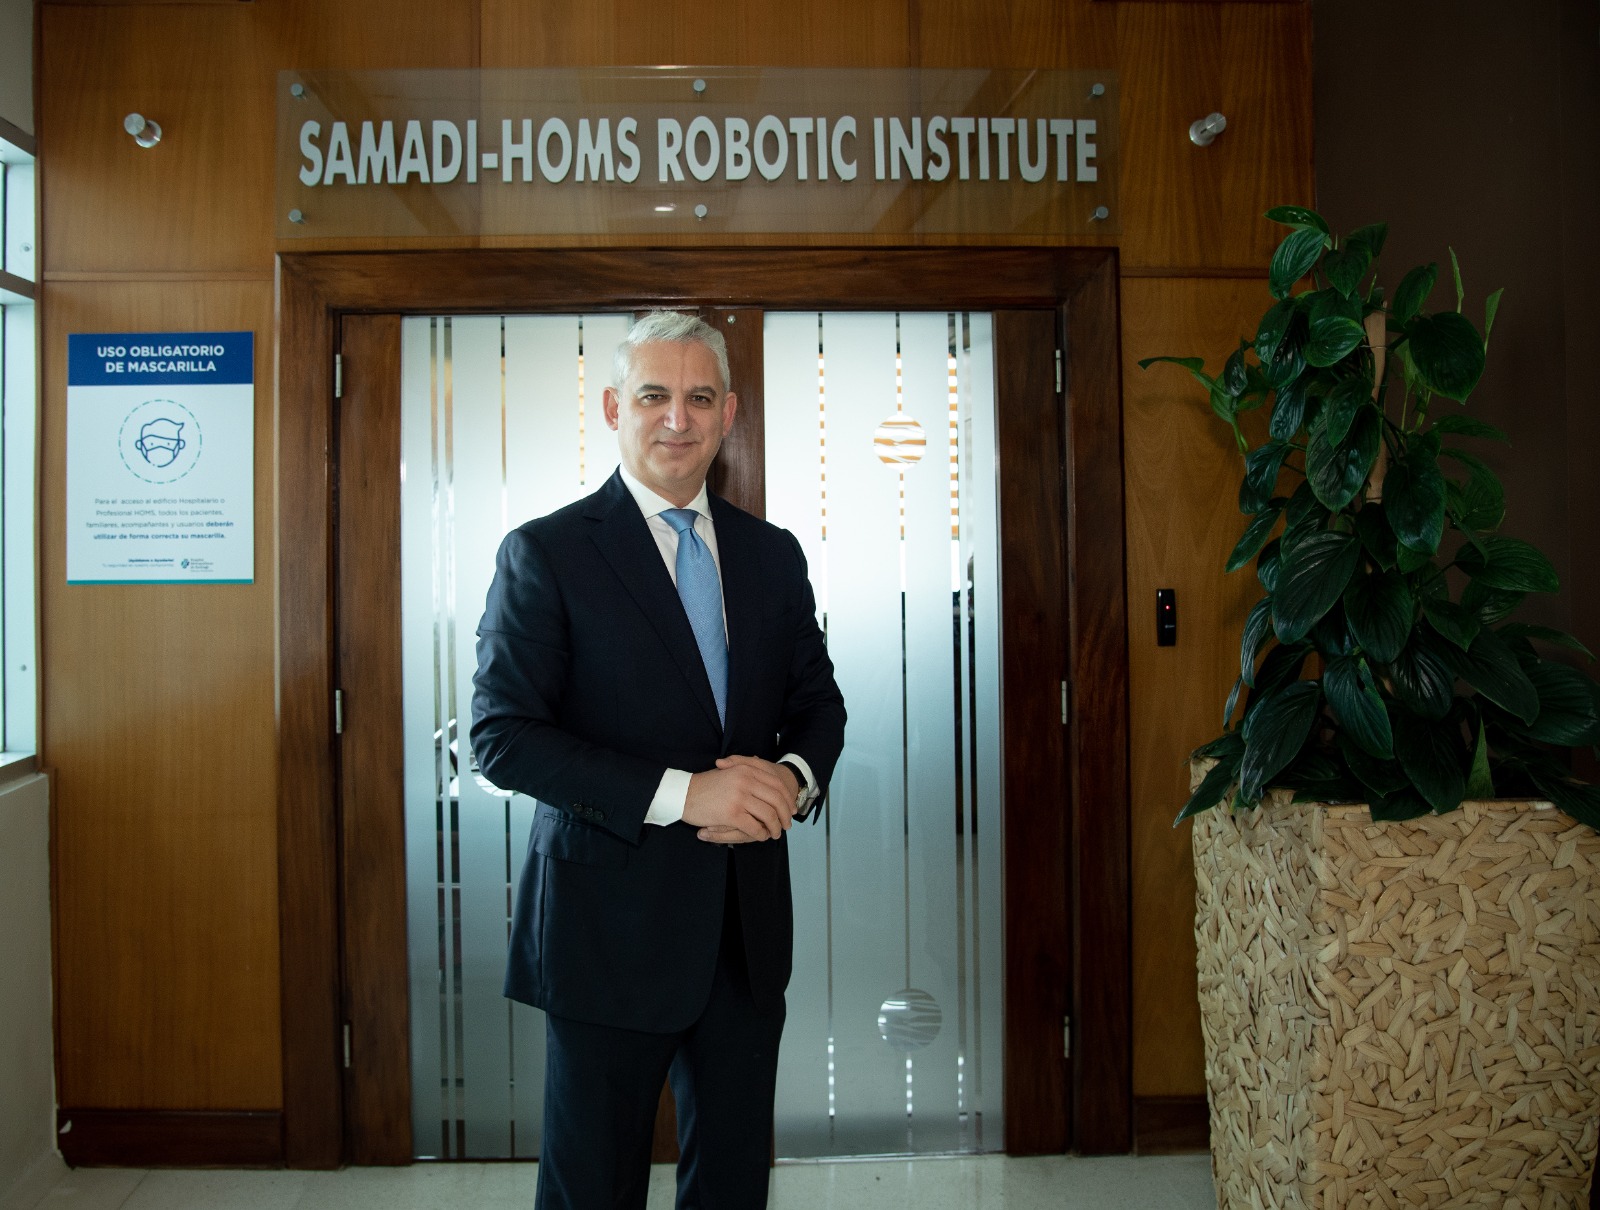 David Samadi cancer de prostata cirugia robotica 3